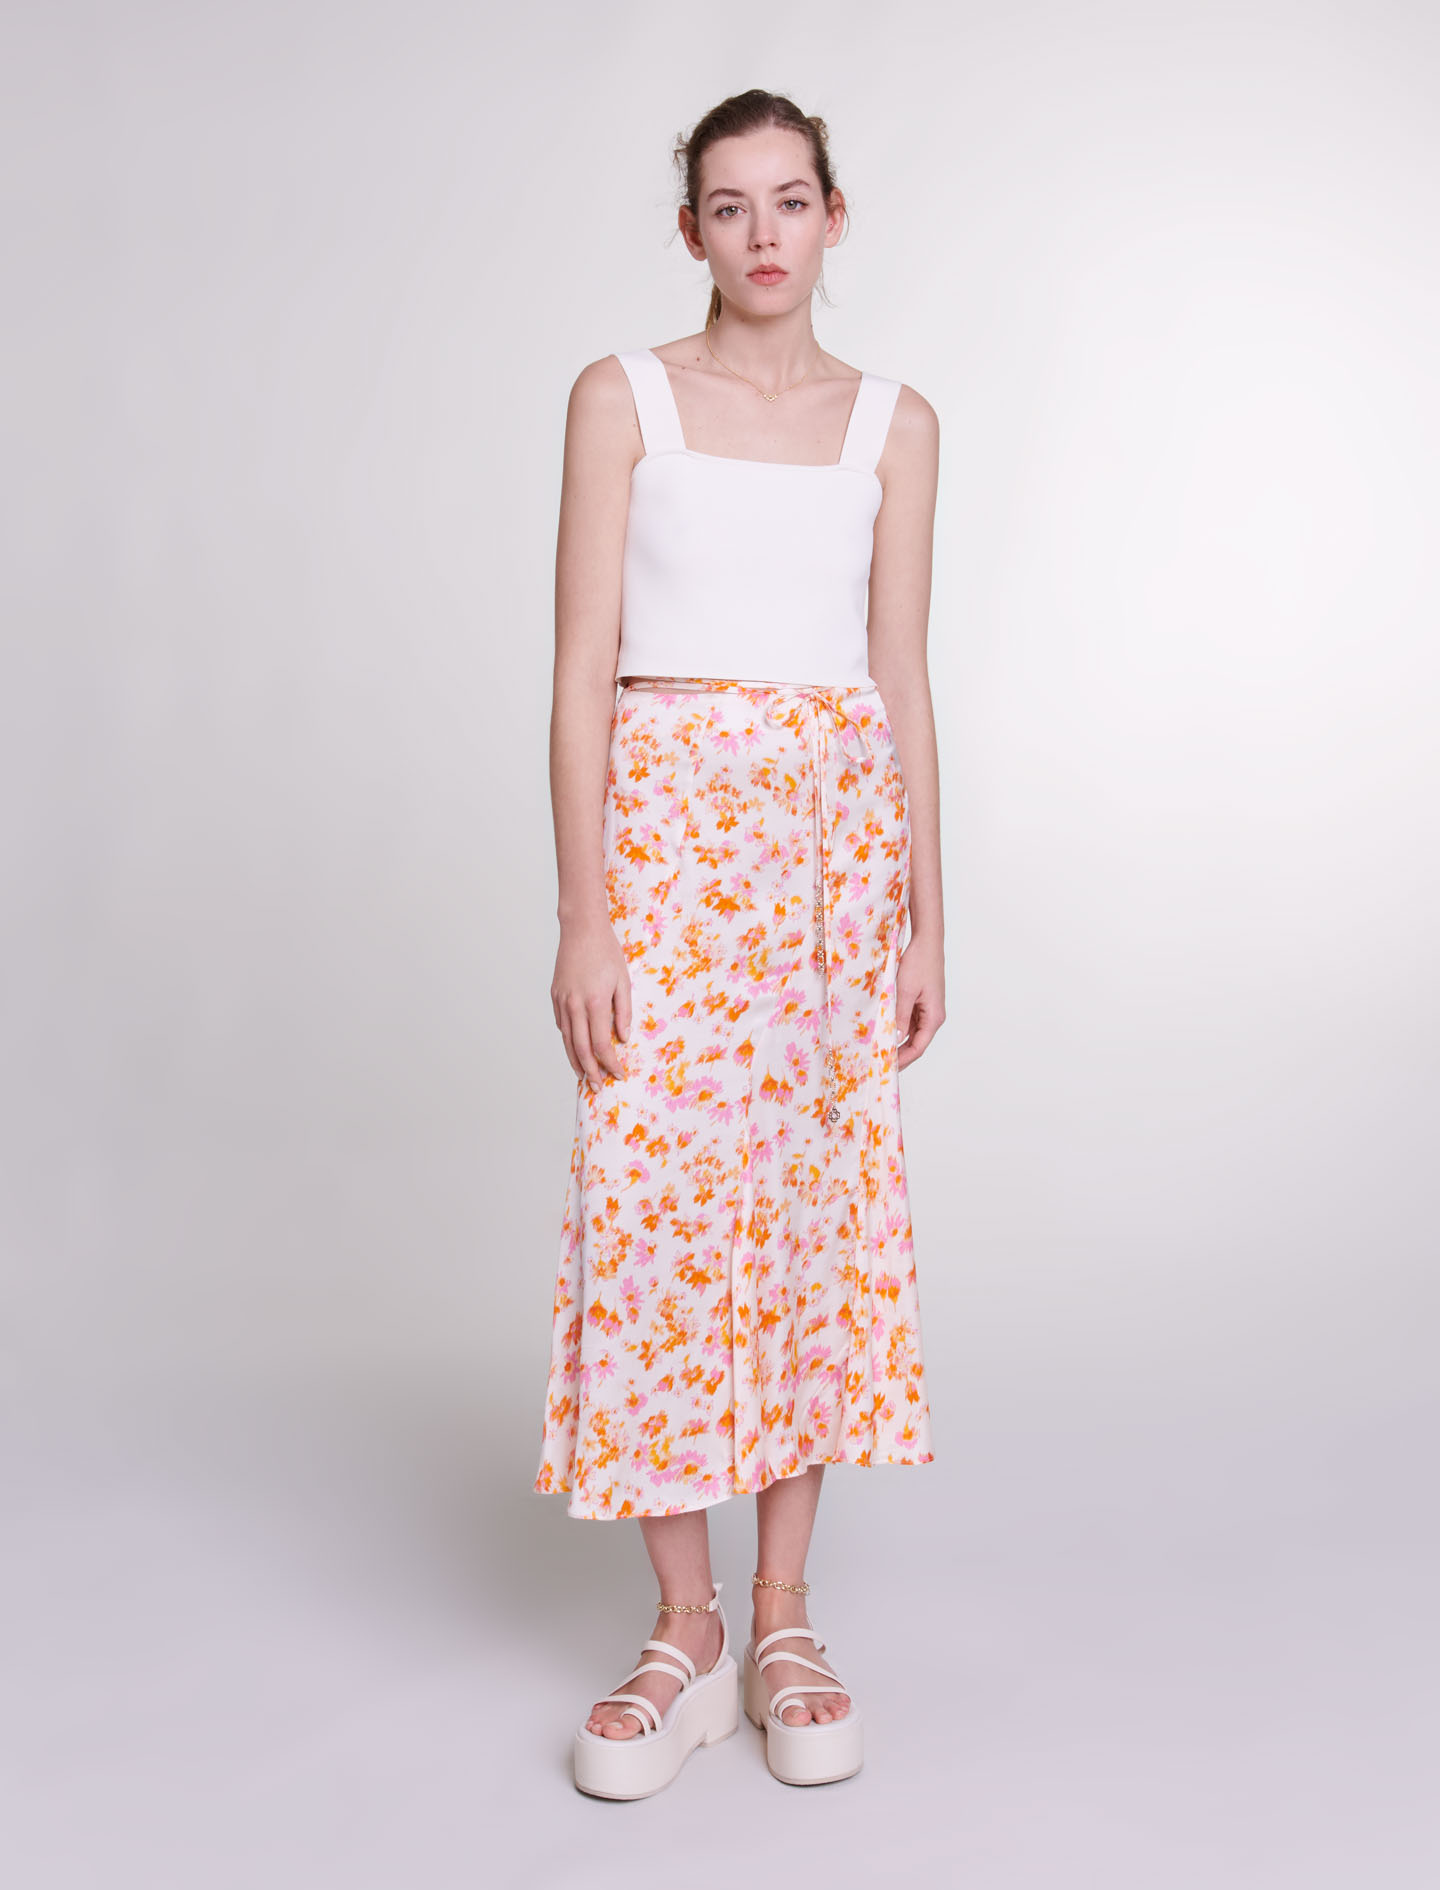 Maje Woman's viscose Satin-effect floral skirt for Spring/Summer, in color sping orange flower print /